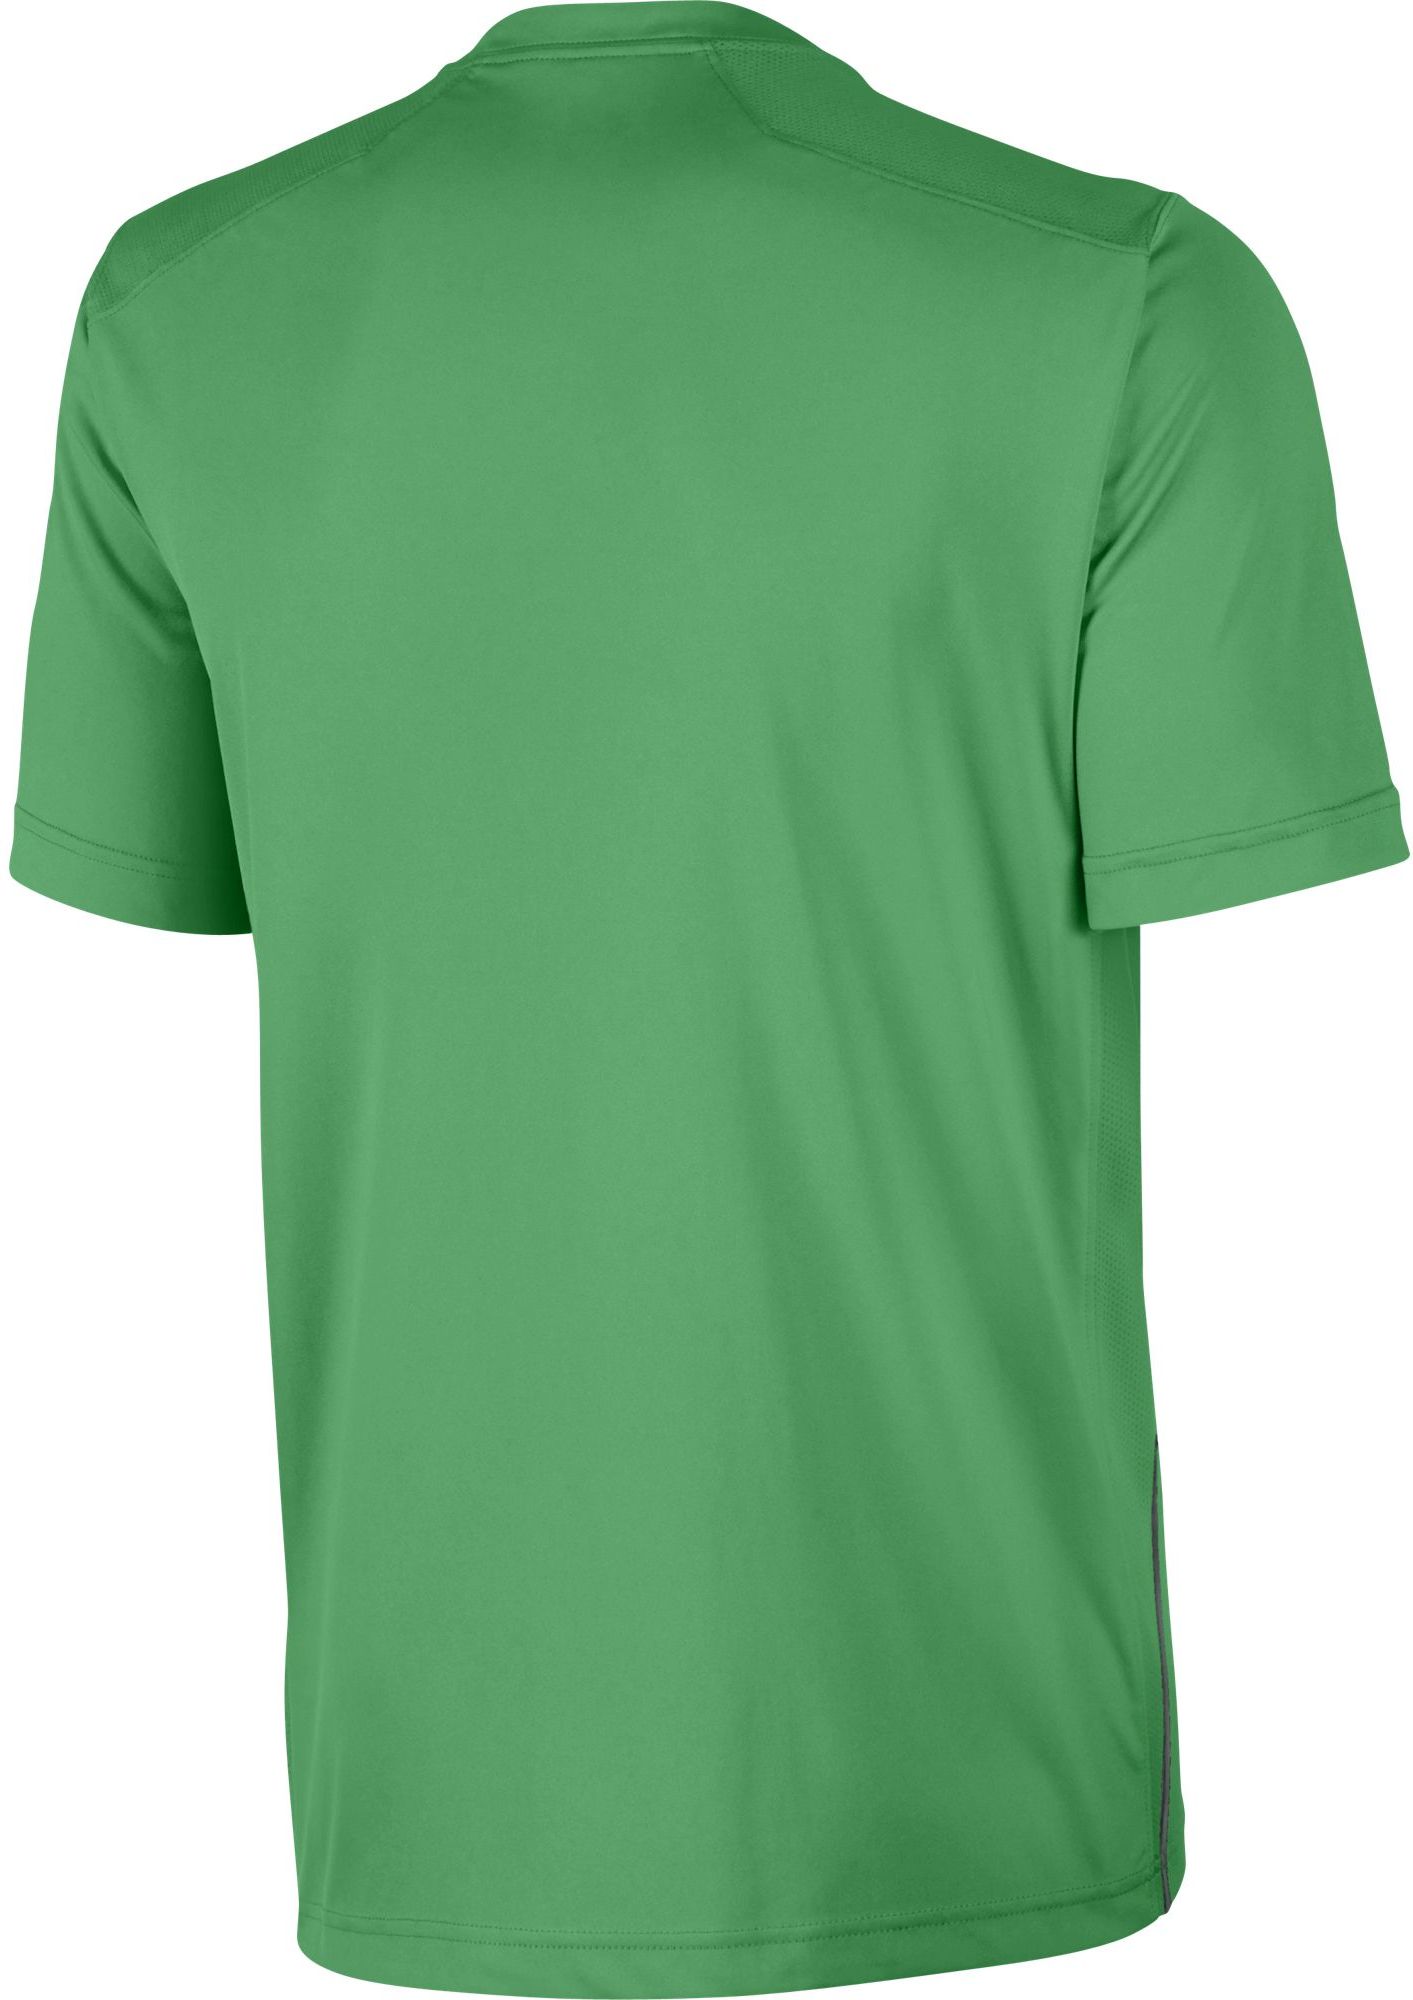 Men's Training Short-Sleeve Shirt